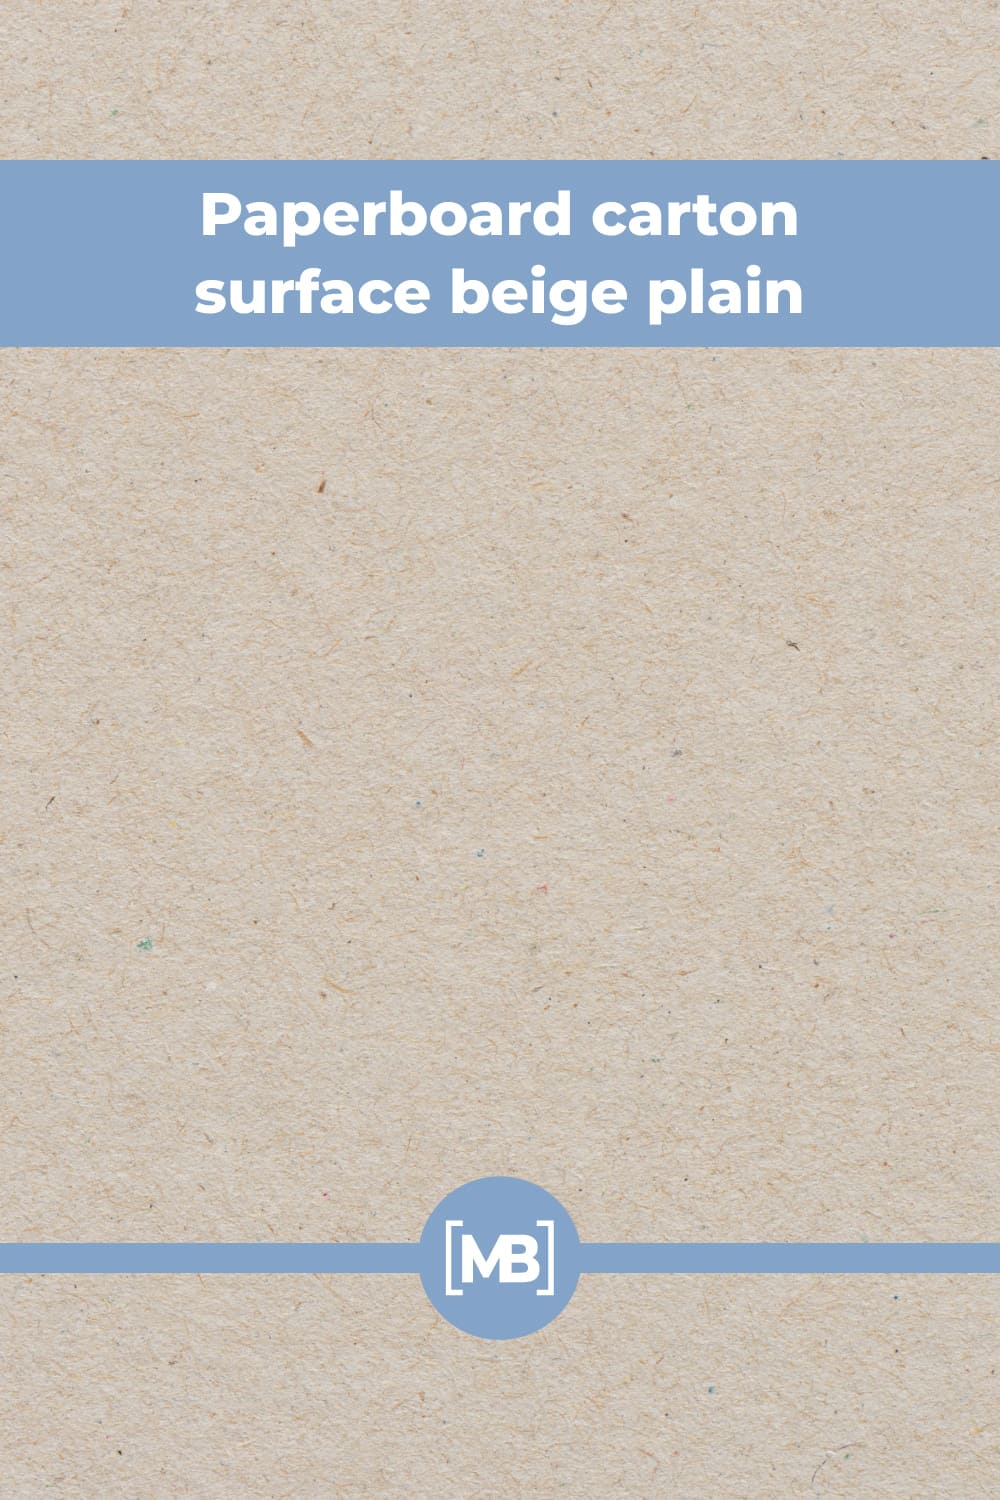 Paperboard carton surface beige plain.